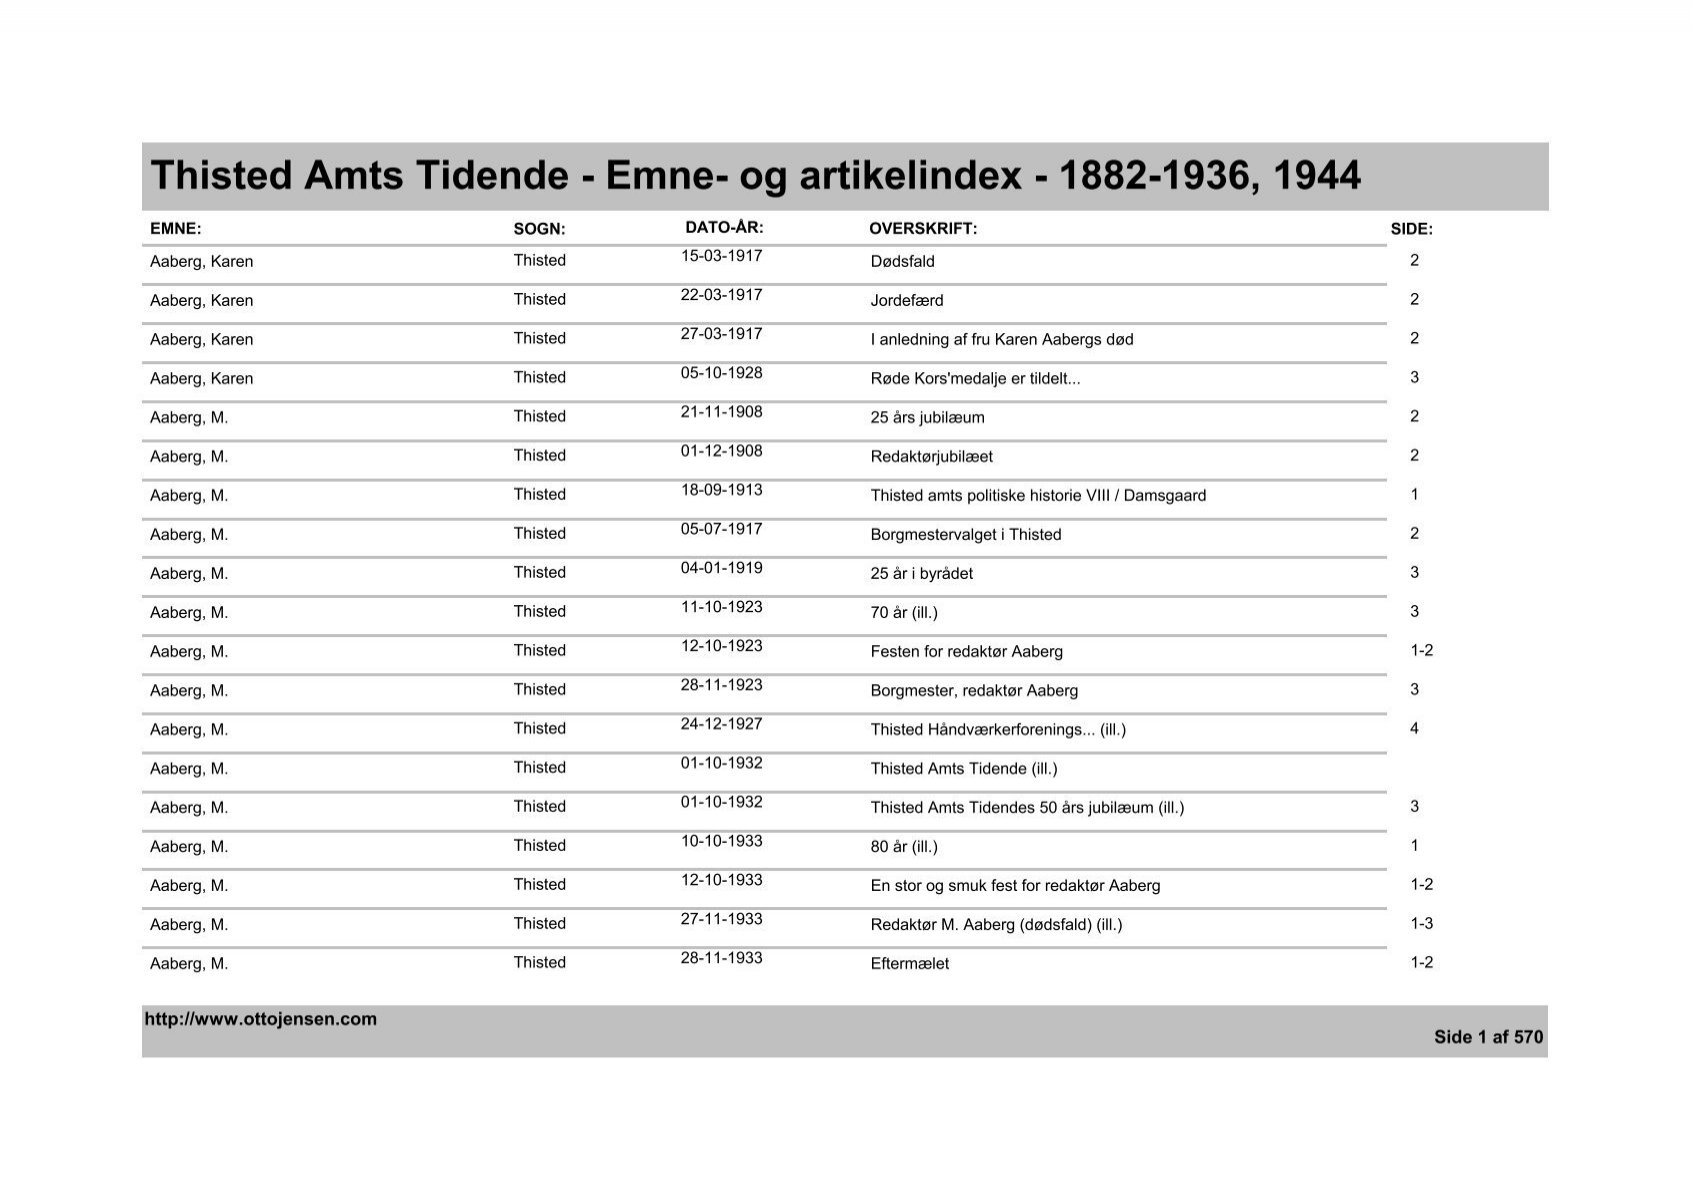 Thisted Amts Tidende - artikelindex - 1882-1936, 1944